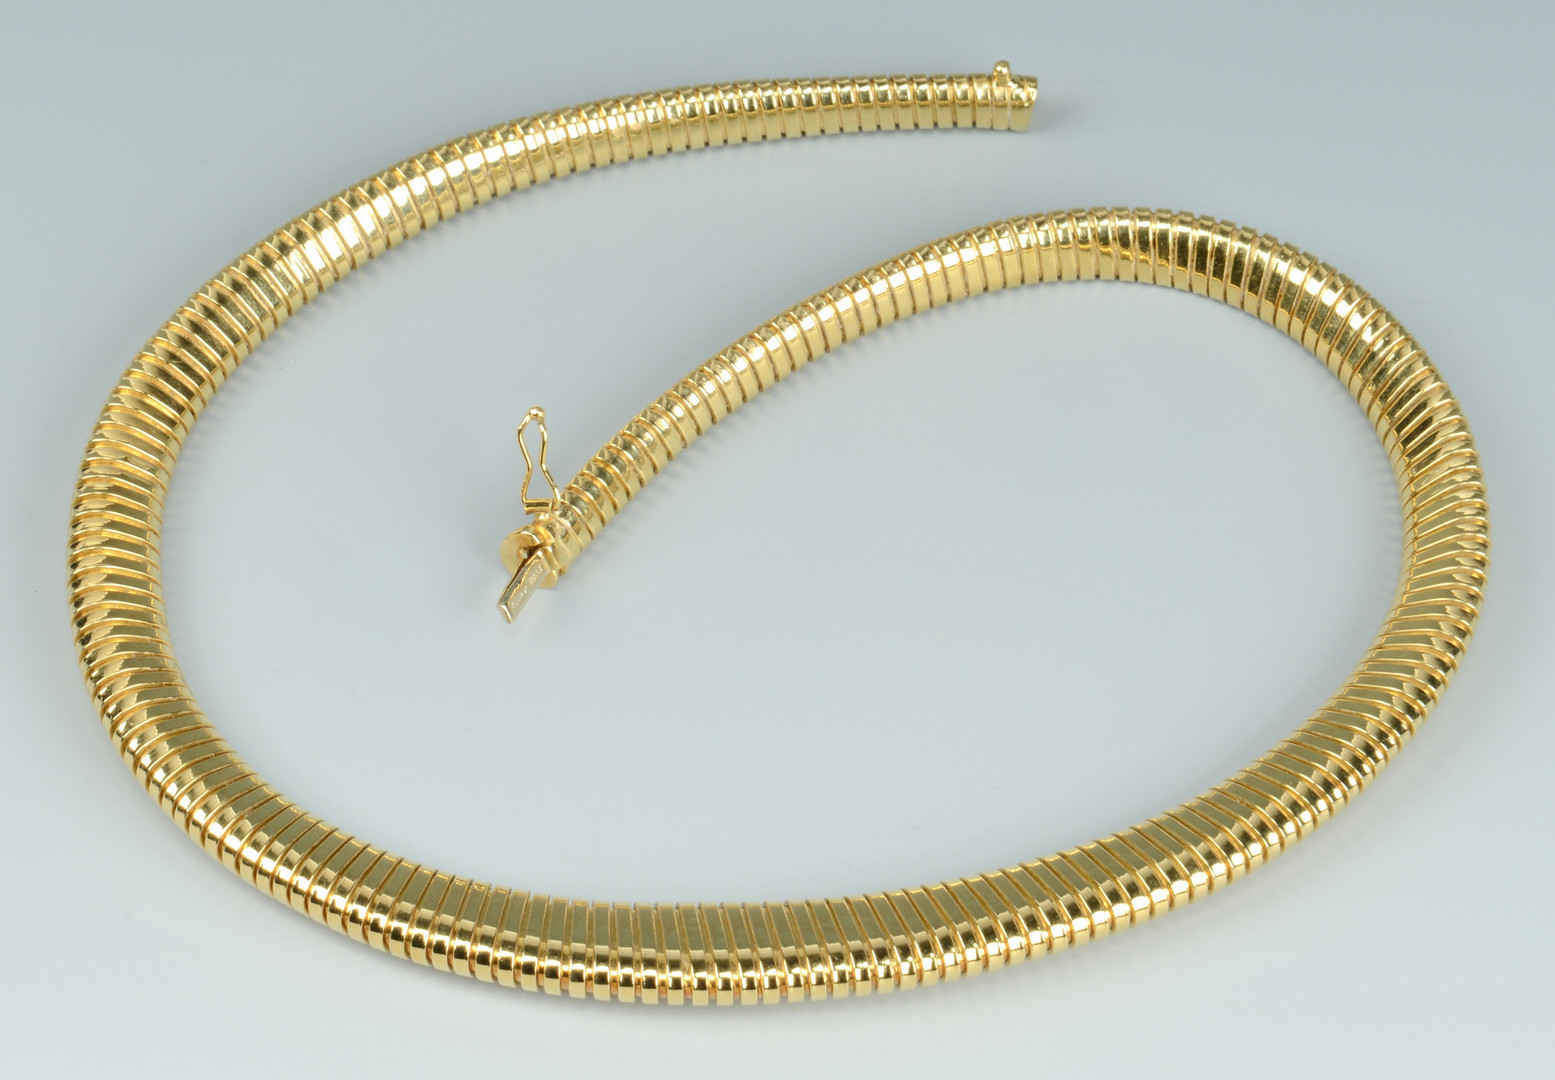 Lot 107: 18k Gold Graduated Collar Necklace, 43.4 grams